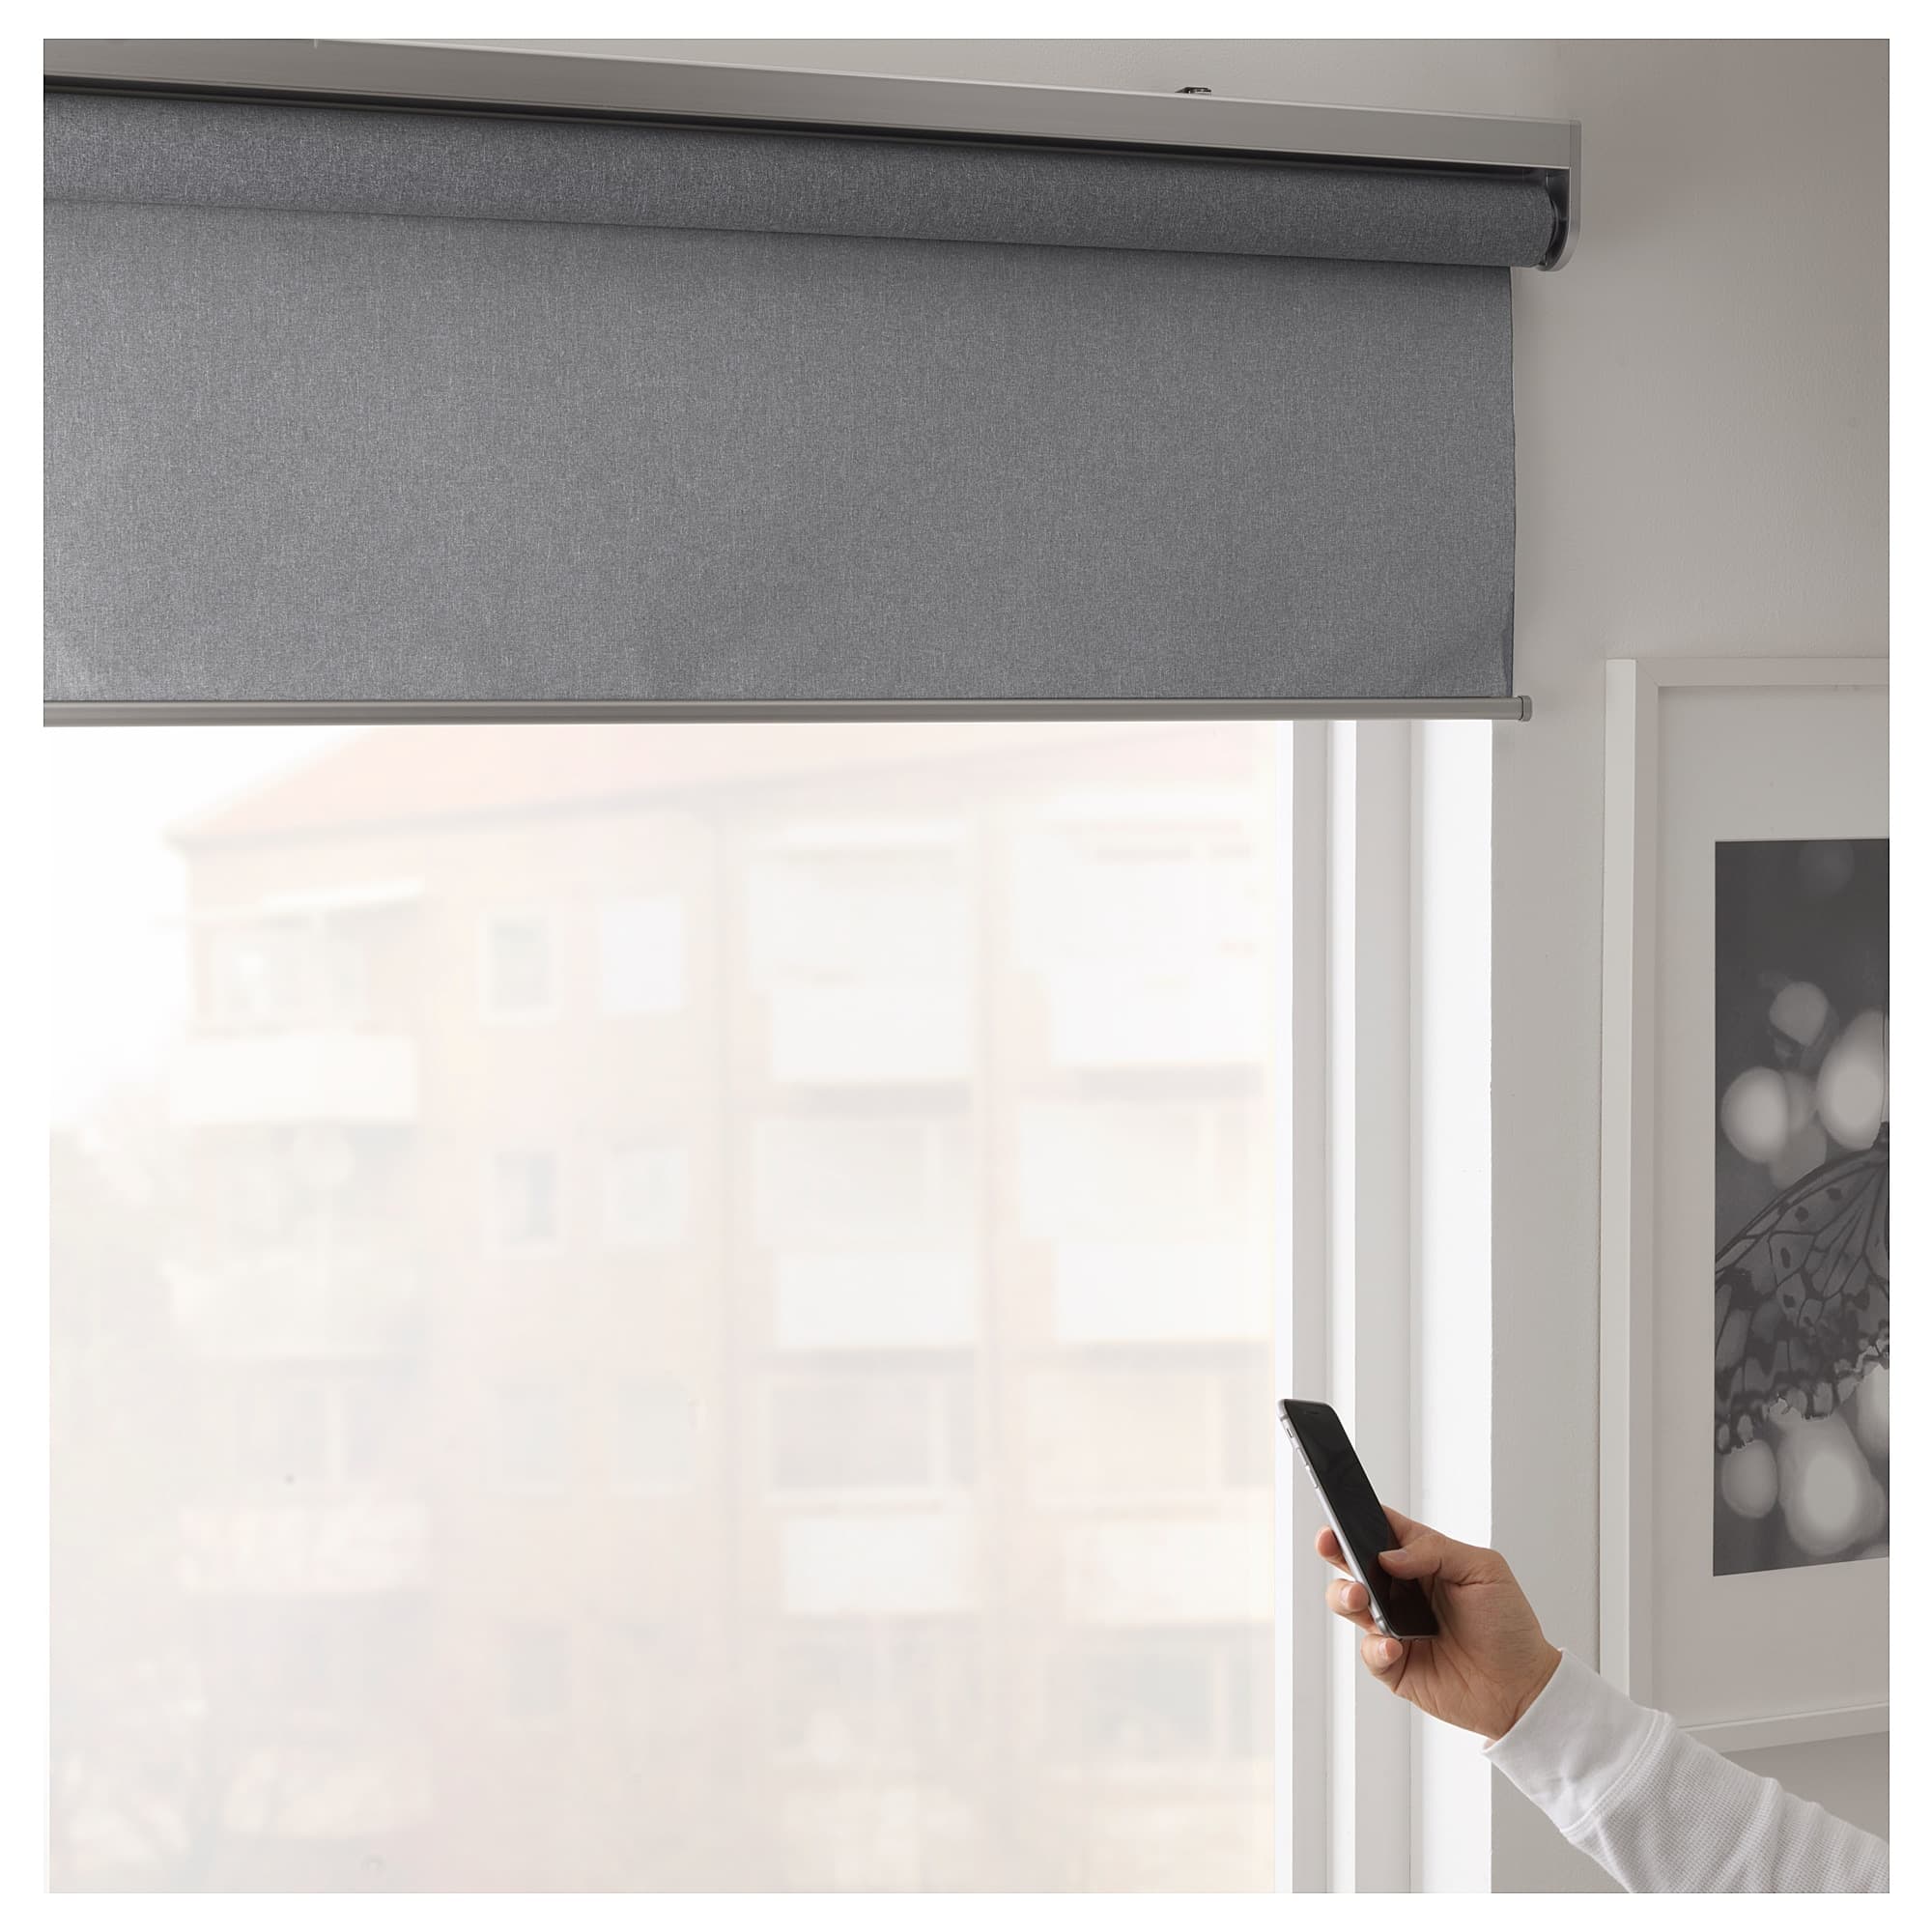 Ikea’s new Fyrtur and Kadrilj blinds work with your iPhone via HomeKit.